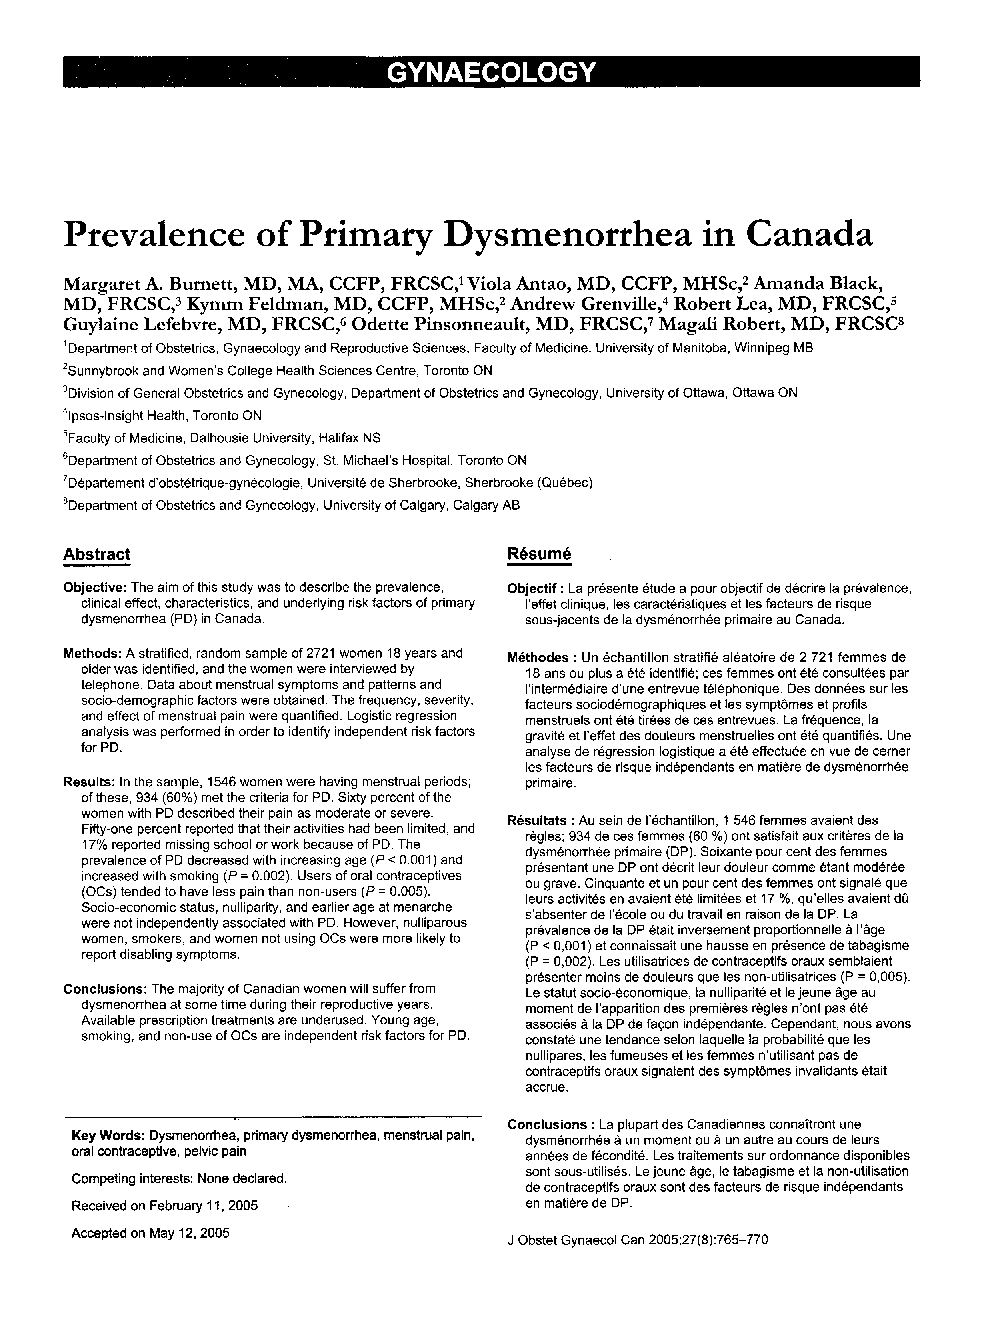 Prevalence of Primary Dysmenorrhea in Canada